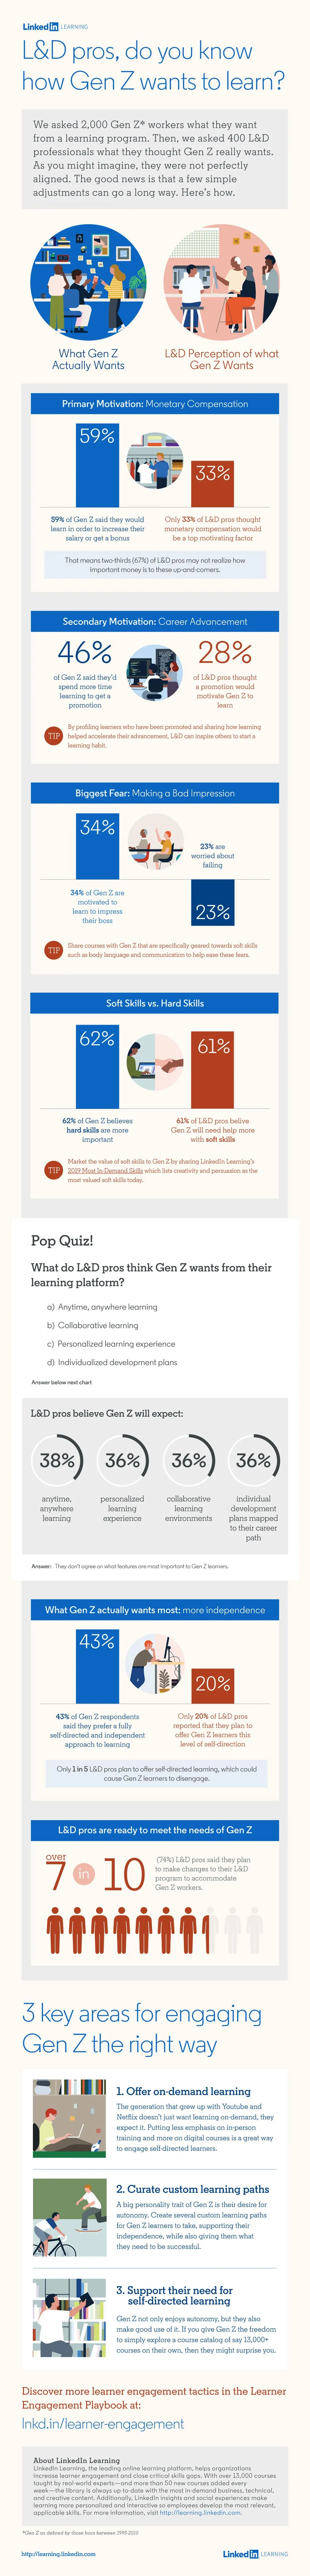 LinkedIn Learning - Infographic - Full Infographic